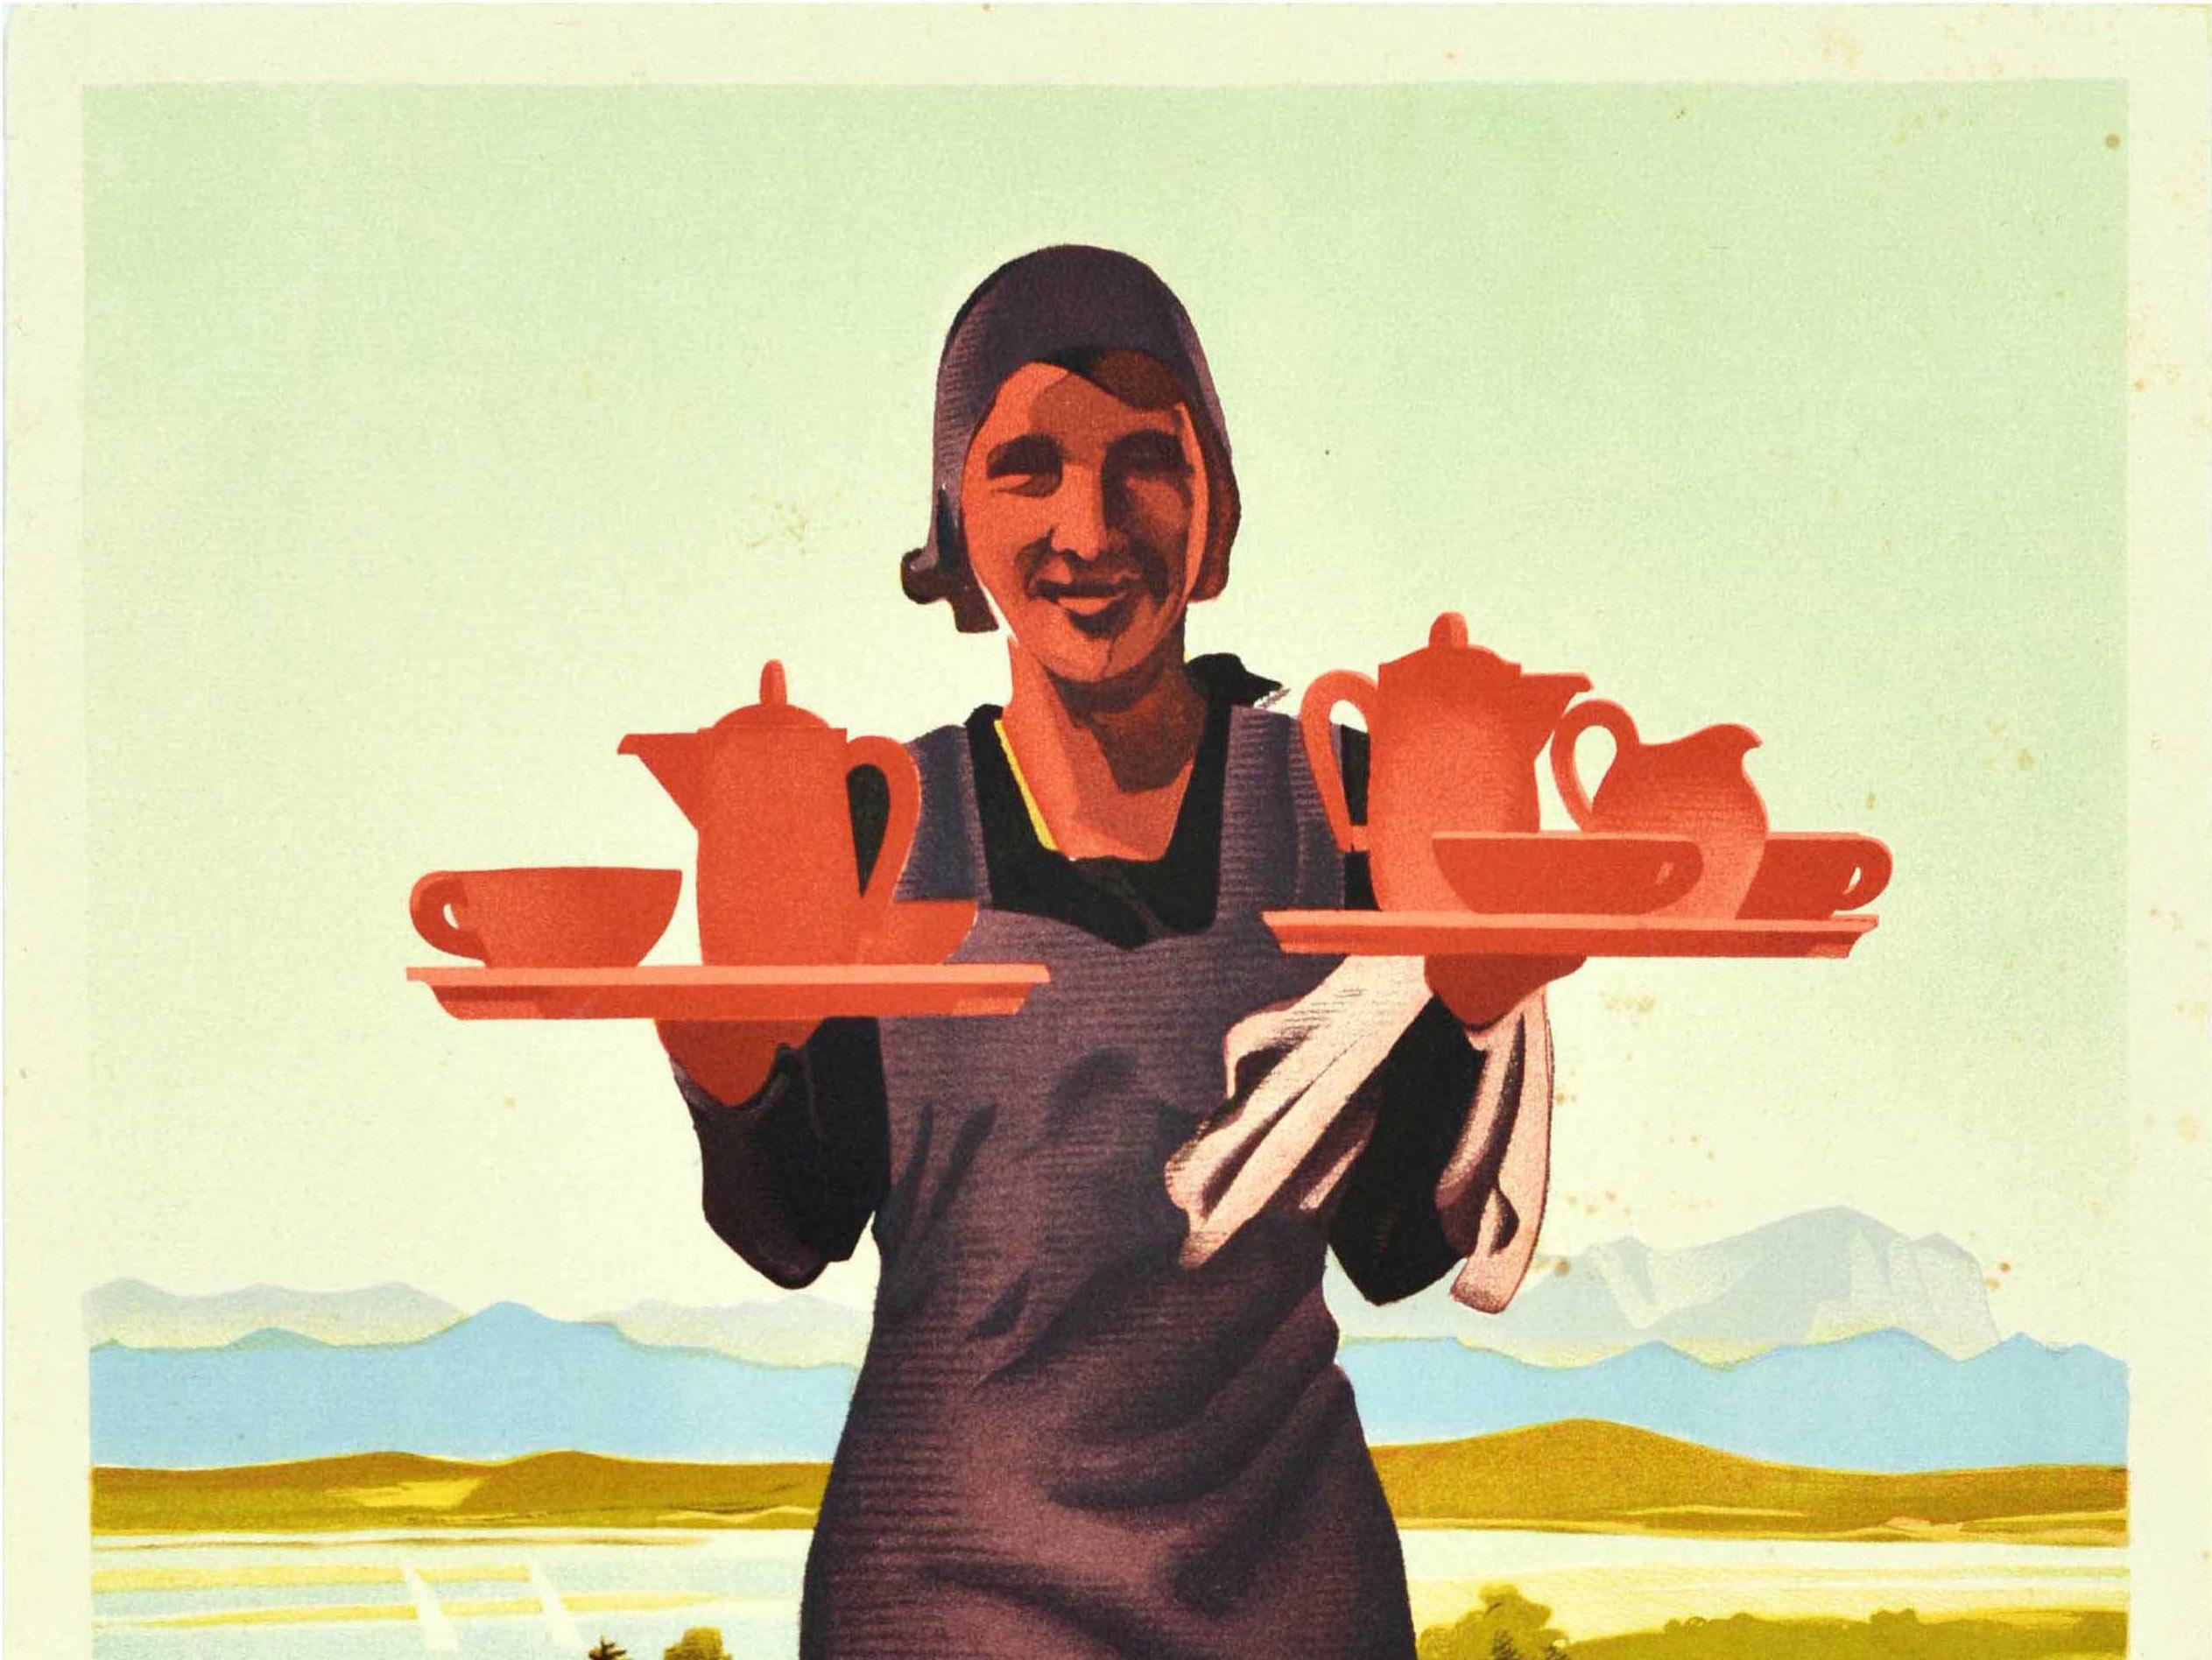 German Original Vintage Poster Forsthaus Ilkahohe Art Deco Restaurant Tutzing Bavaria For Sale